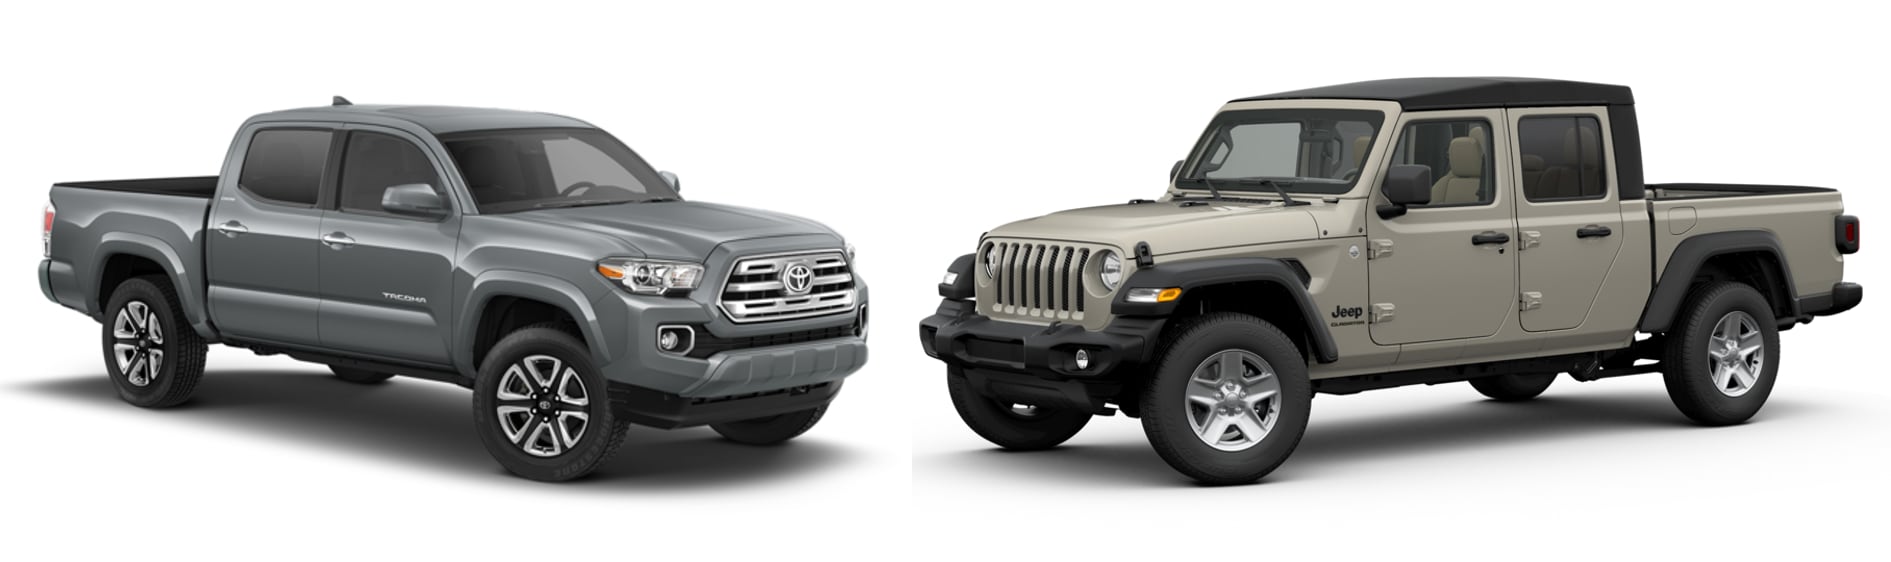 Jeep Gladiator vs. Toyota Compare the Models